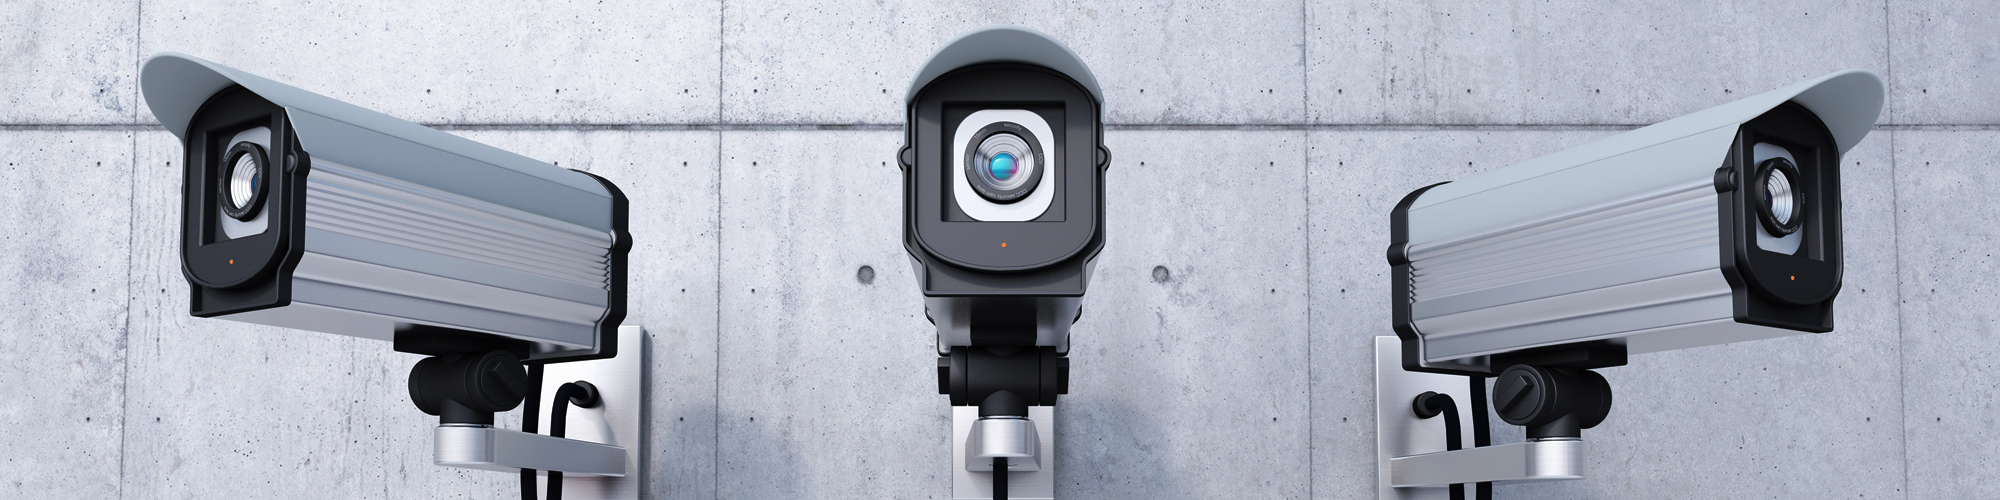 Commercial Security Cameras in Kansas City, MO 